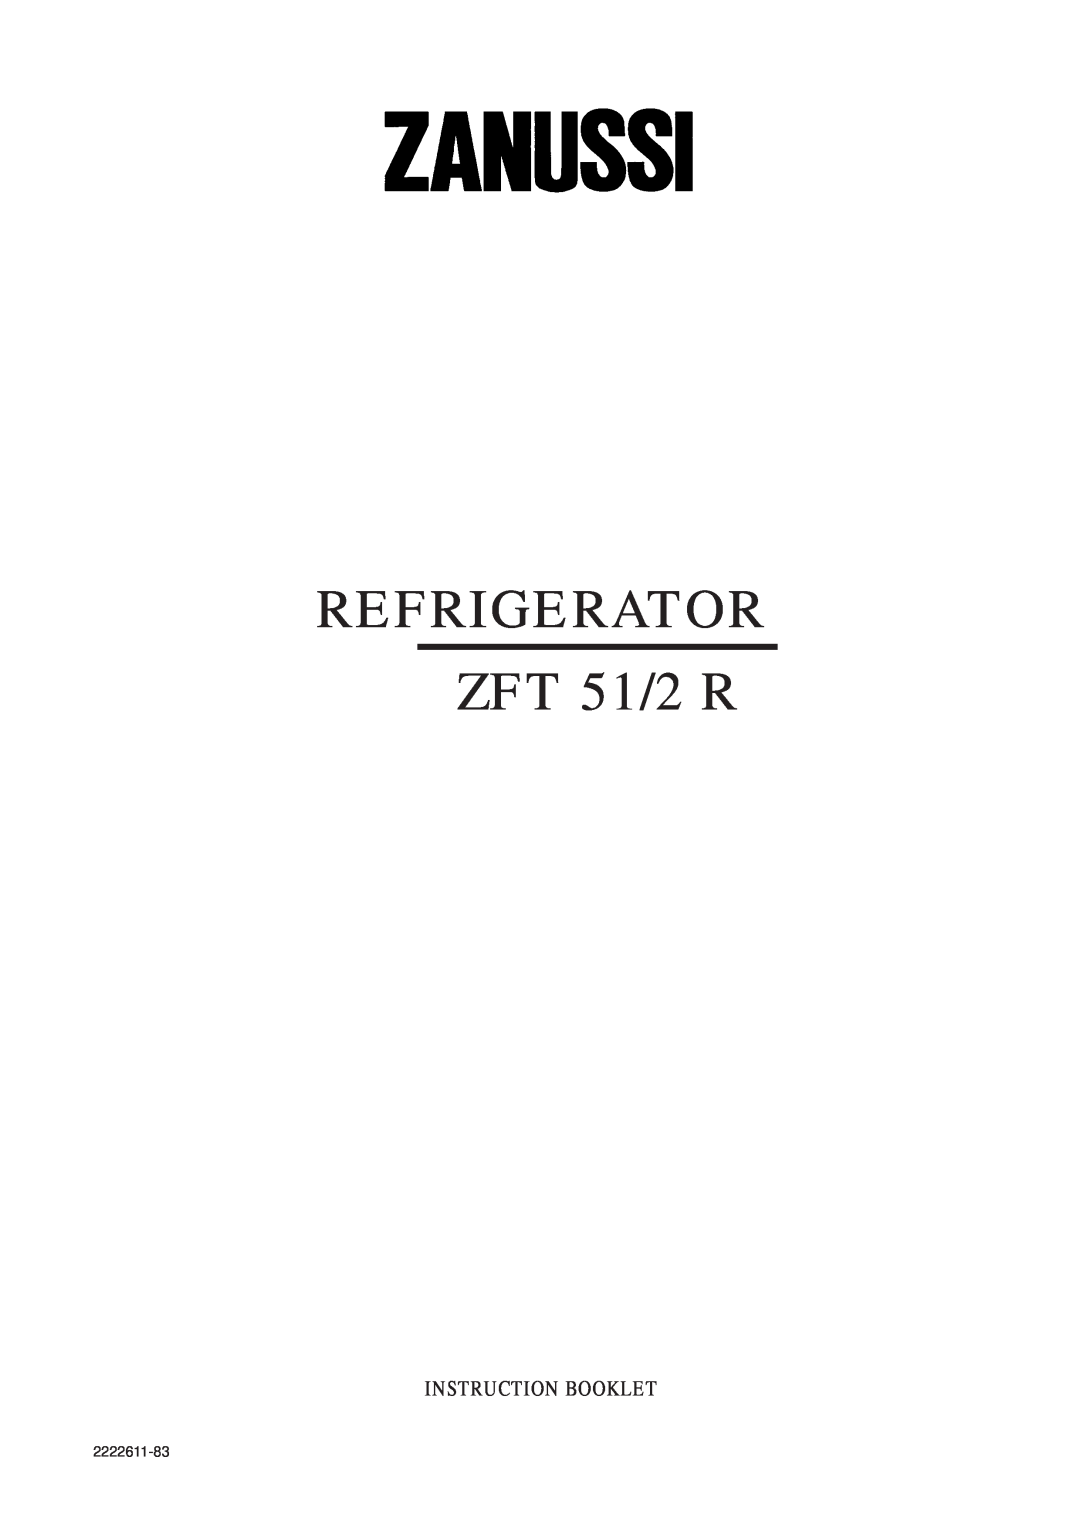 Zanussi ZFT 51/2 R manual Refrigerator, Instruction Booklet, 2222611-83 